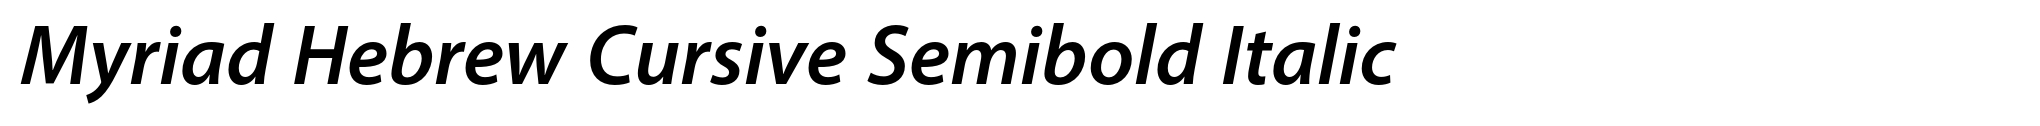 Myriad Hebrew Cursive Semibold Italic image